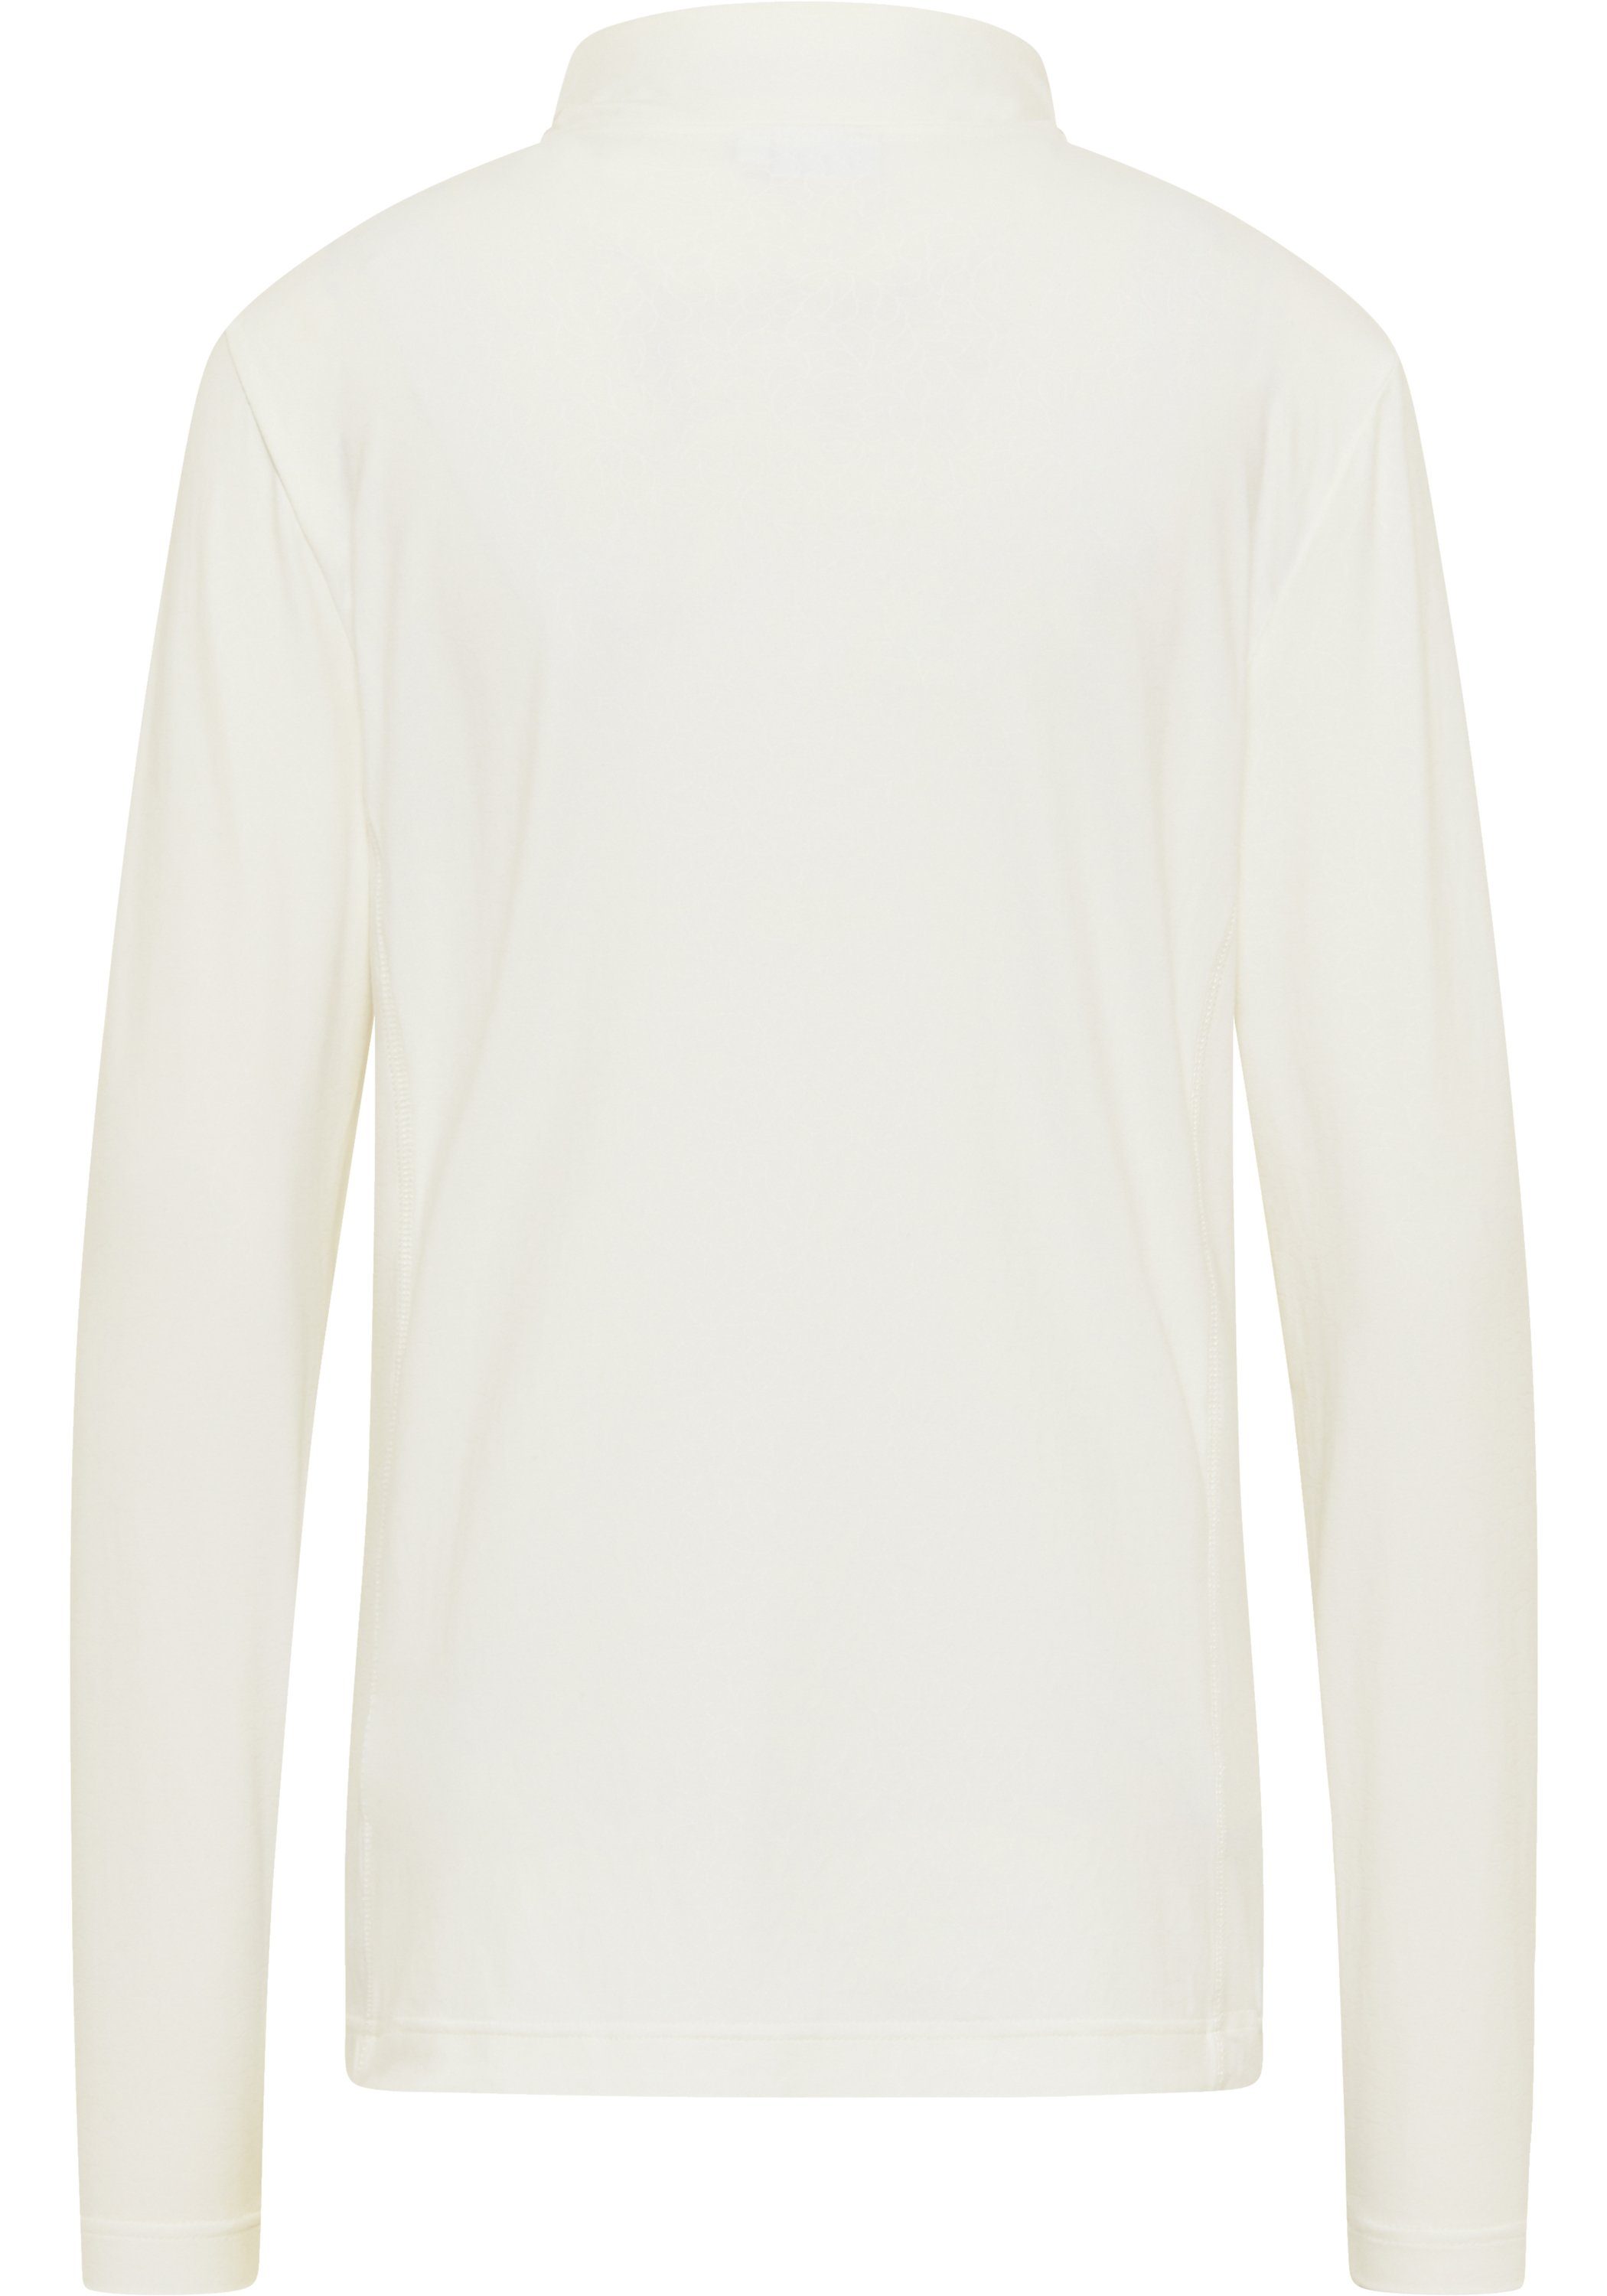 Joy FRANCA Sweatshirt Zip-Shirt Sportswear cream